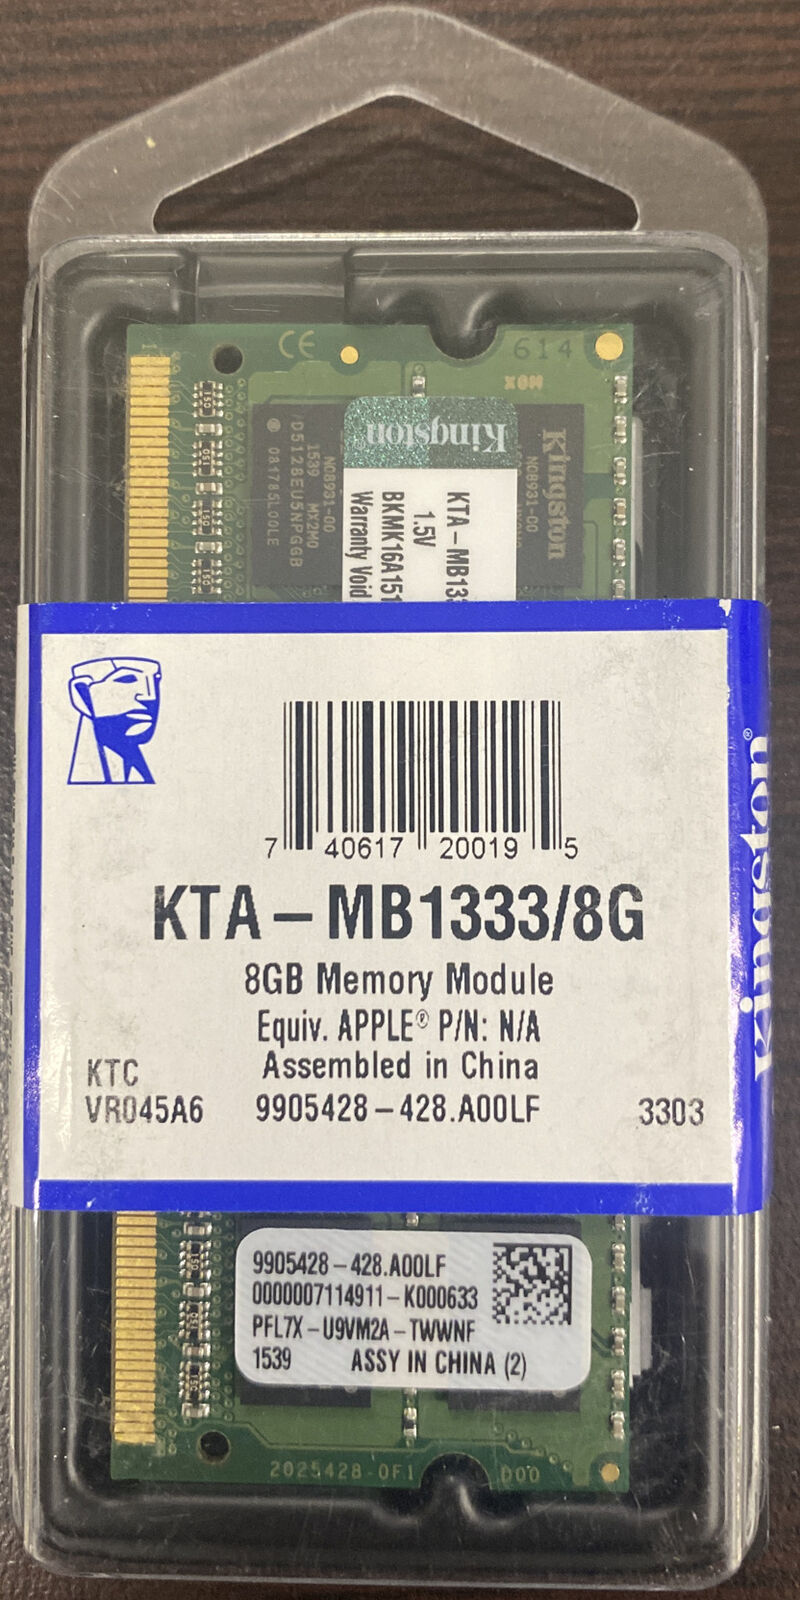 Kingston PC3-10600 8GB SO-DIMM 1333 MHz DDR3 Memory (KTA-MB1333/8G))